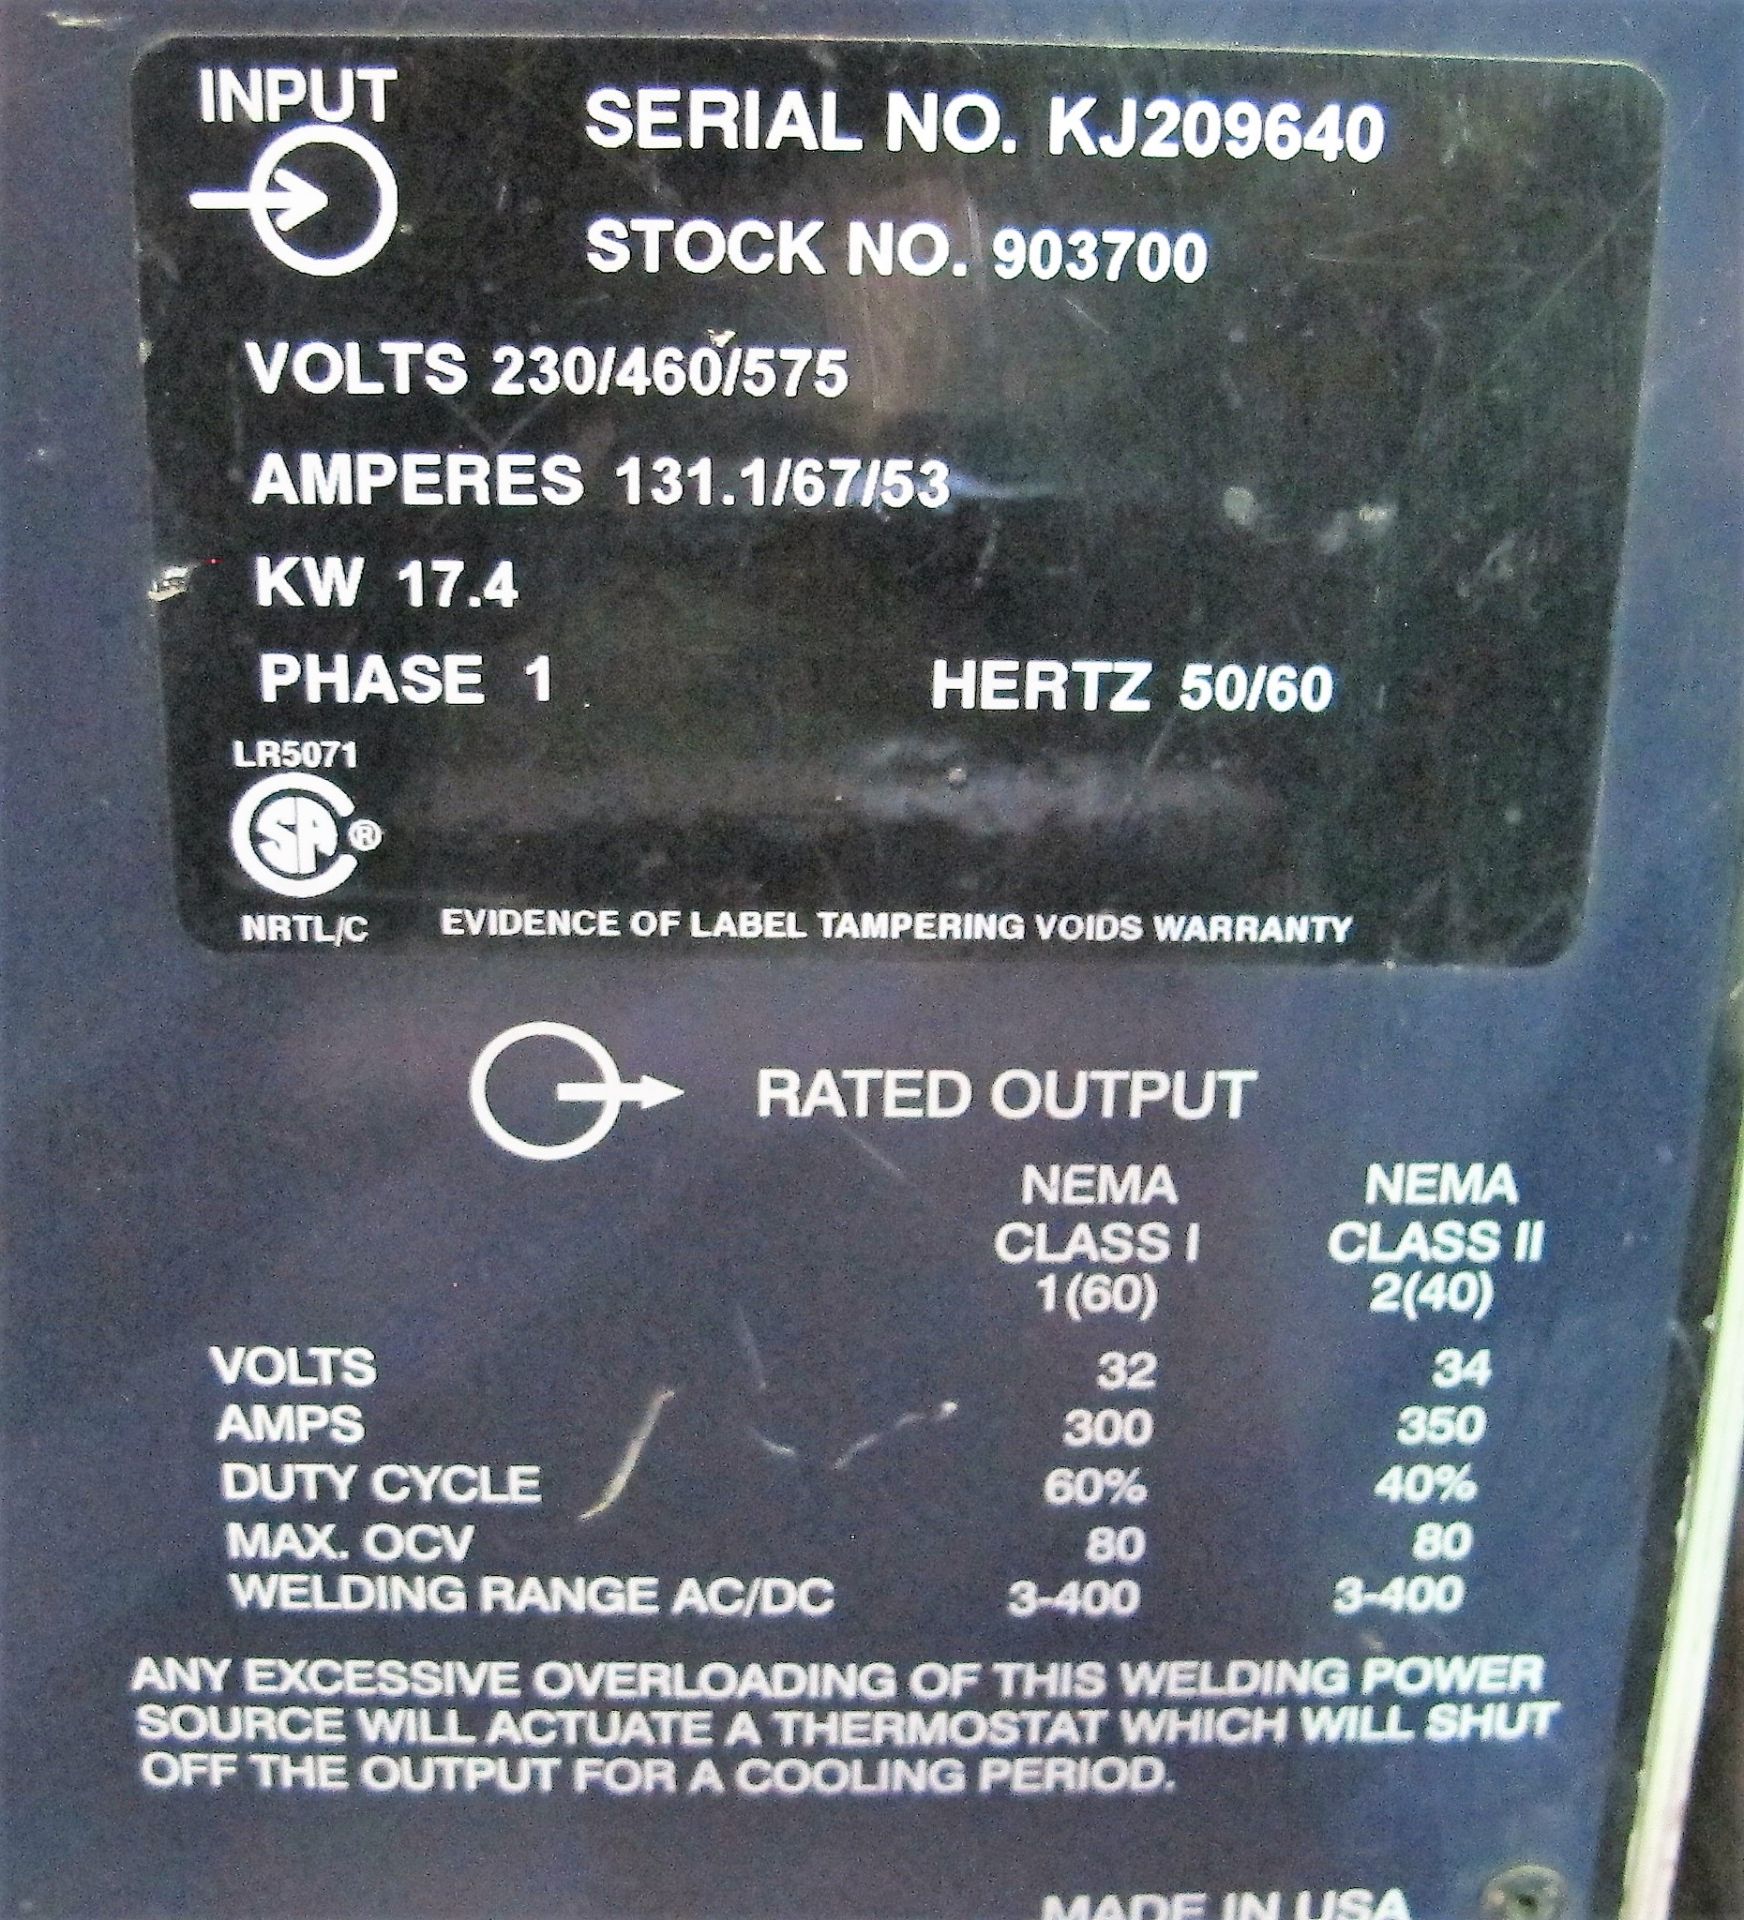 HOBART CYBERTIG 350LX CC AC/DC SQUAREWAVE POWER SOURCE, S/N KJ209640 W/ BEST WELDS COOLING UNIT, - Image 3 of 4